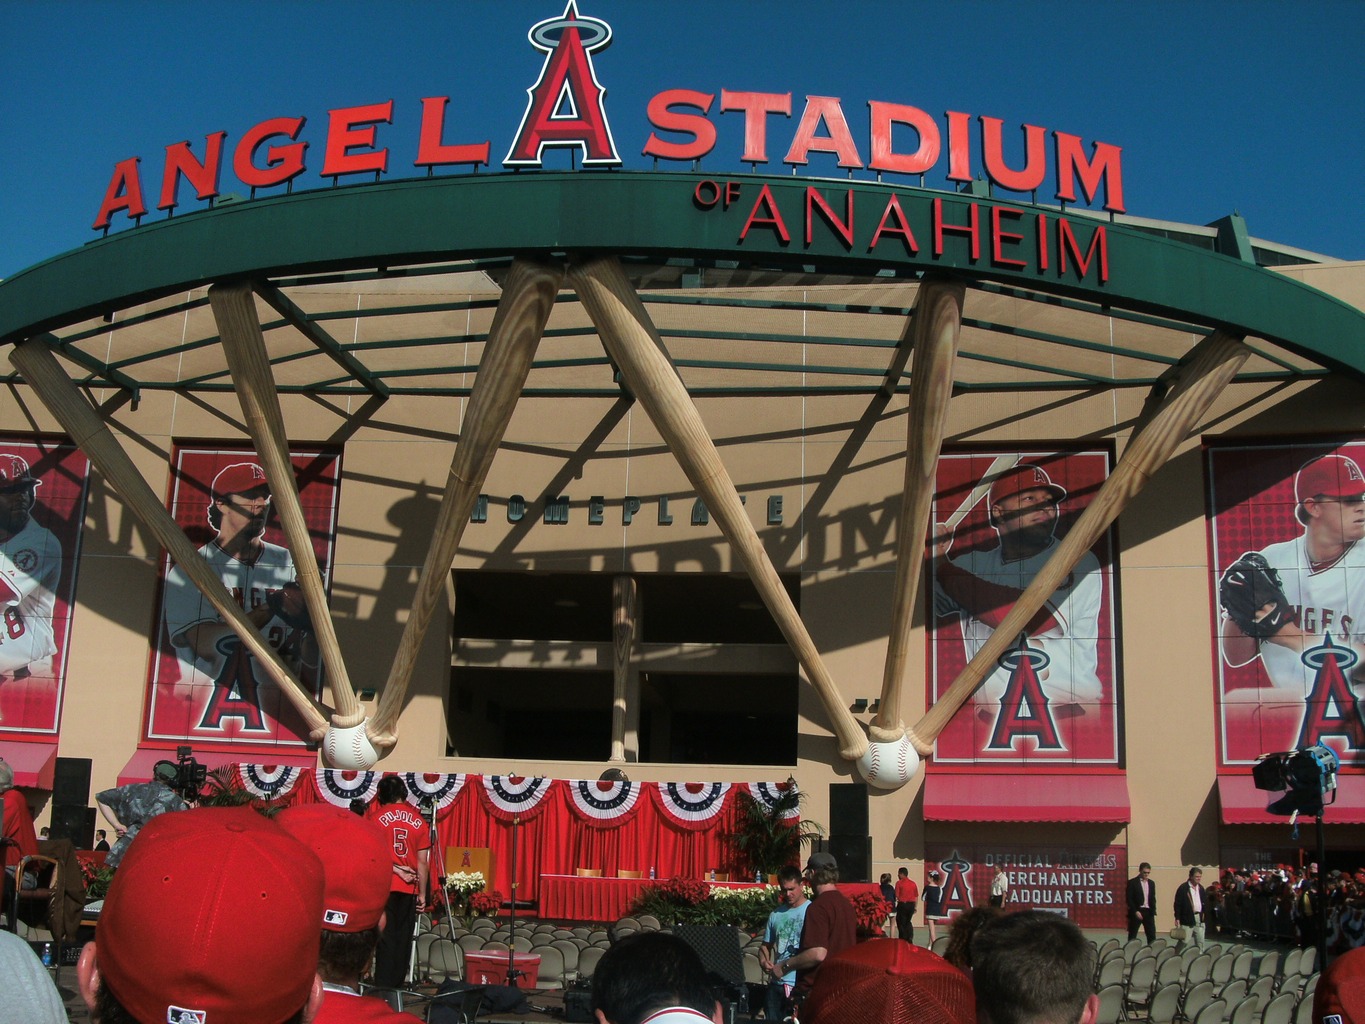 Team Cap History: Los Angeles/California/Anaheim/Los Angeles Angels of  Anaheim